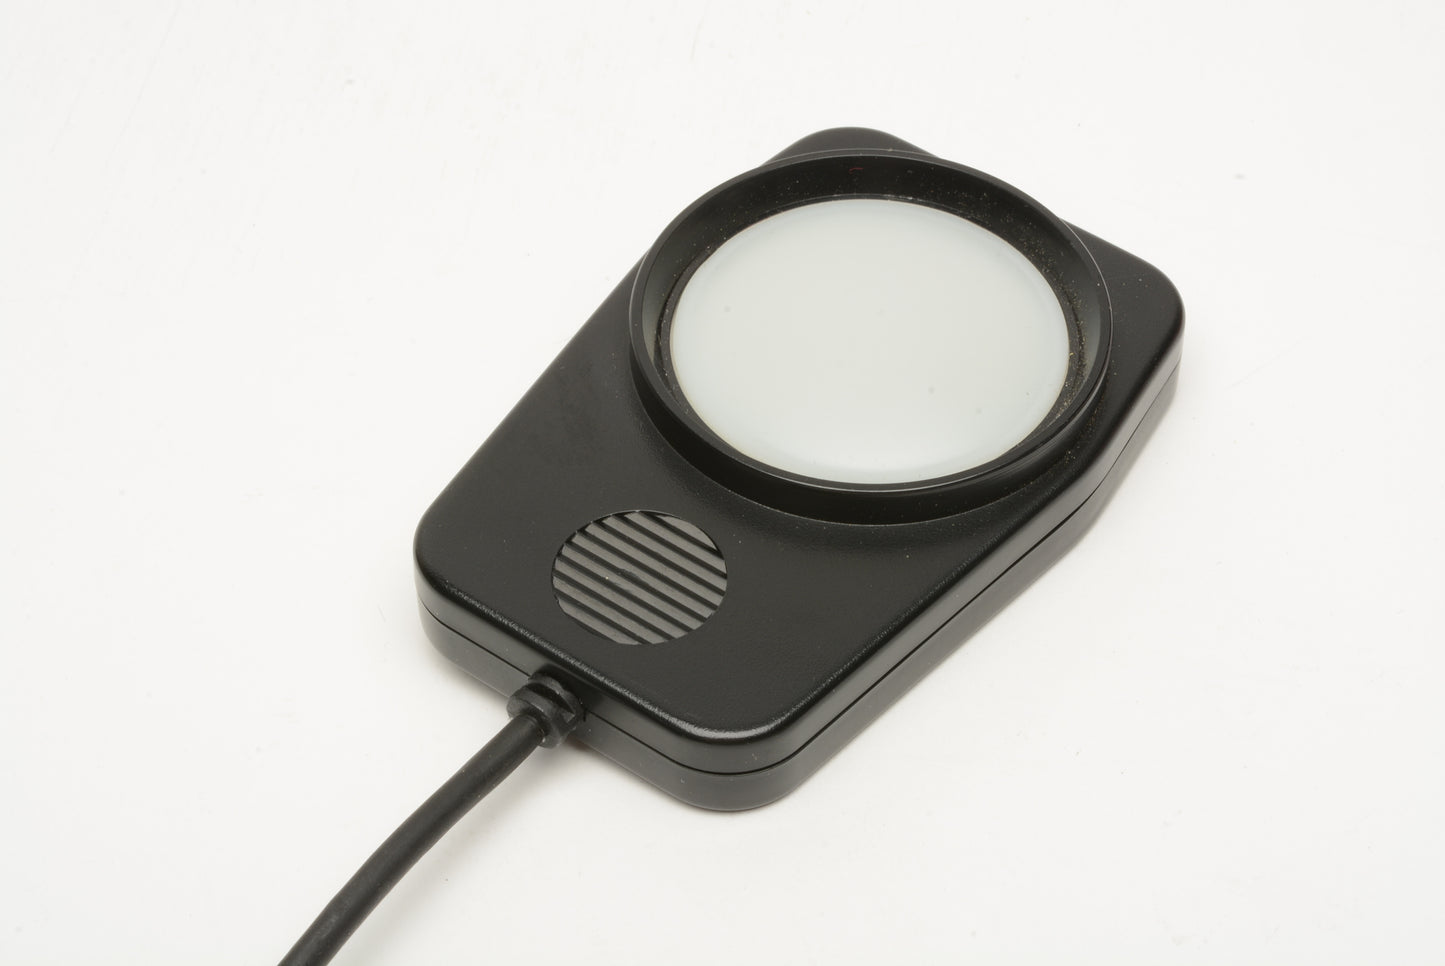 Extech Instruments digital light meter w/remote sensor, case, tested, great